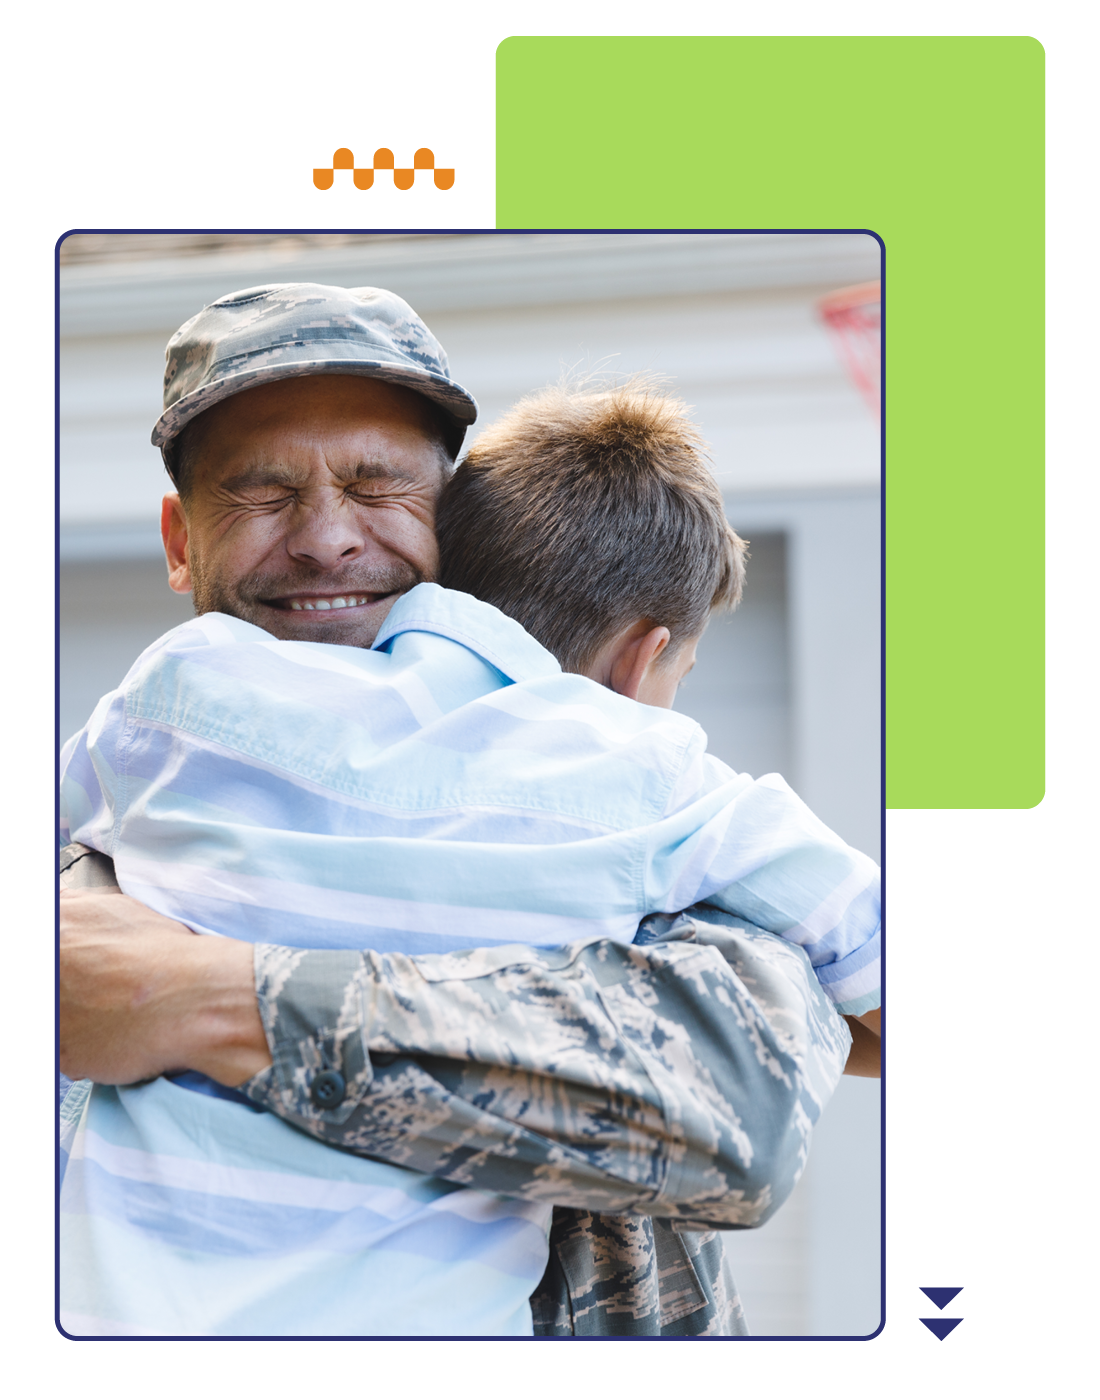 holland pathways veterans addiction treatment